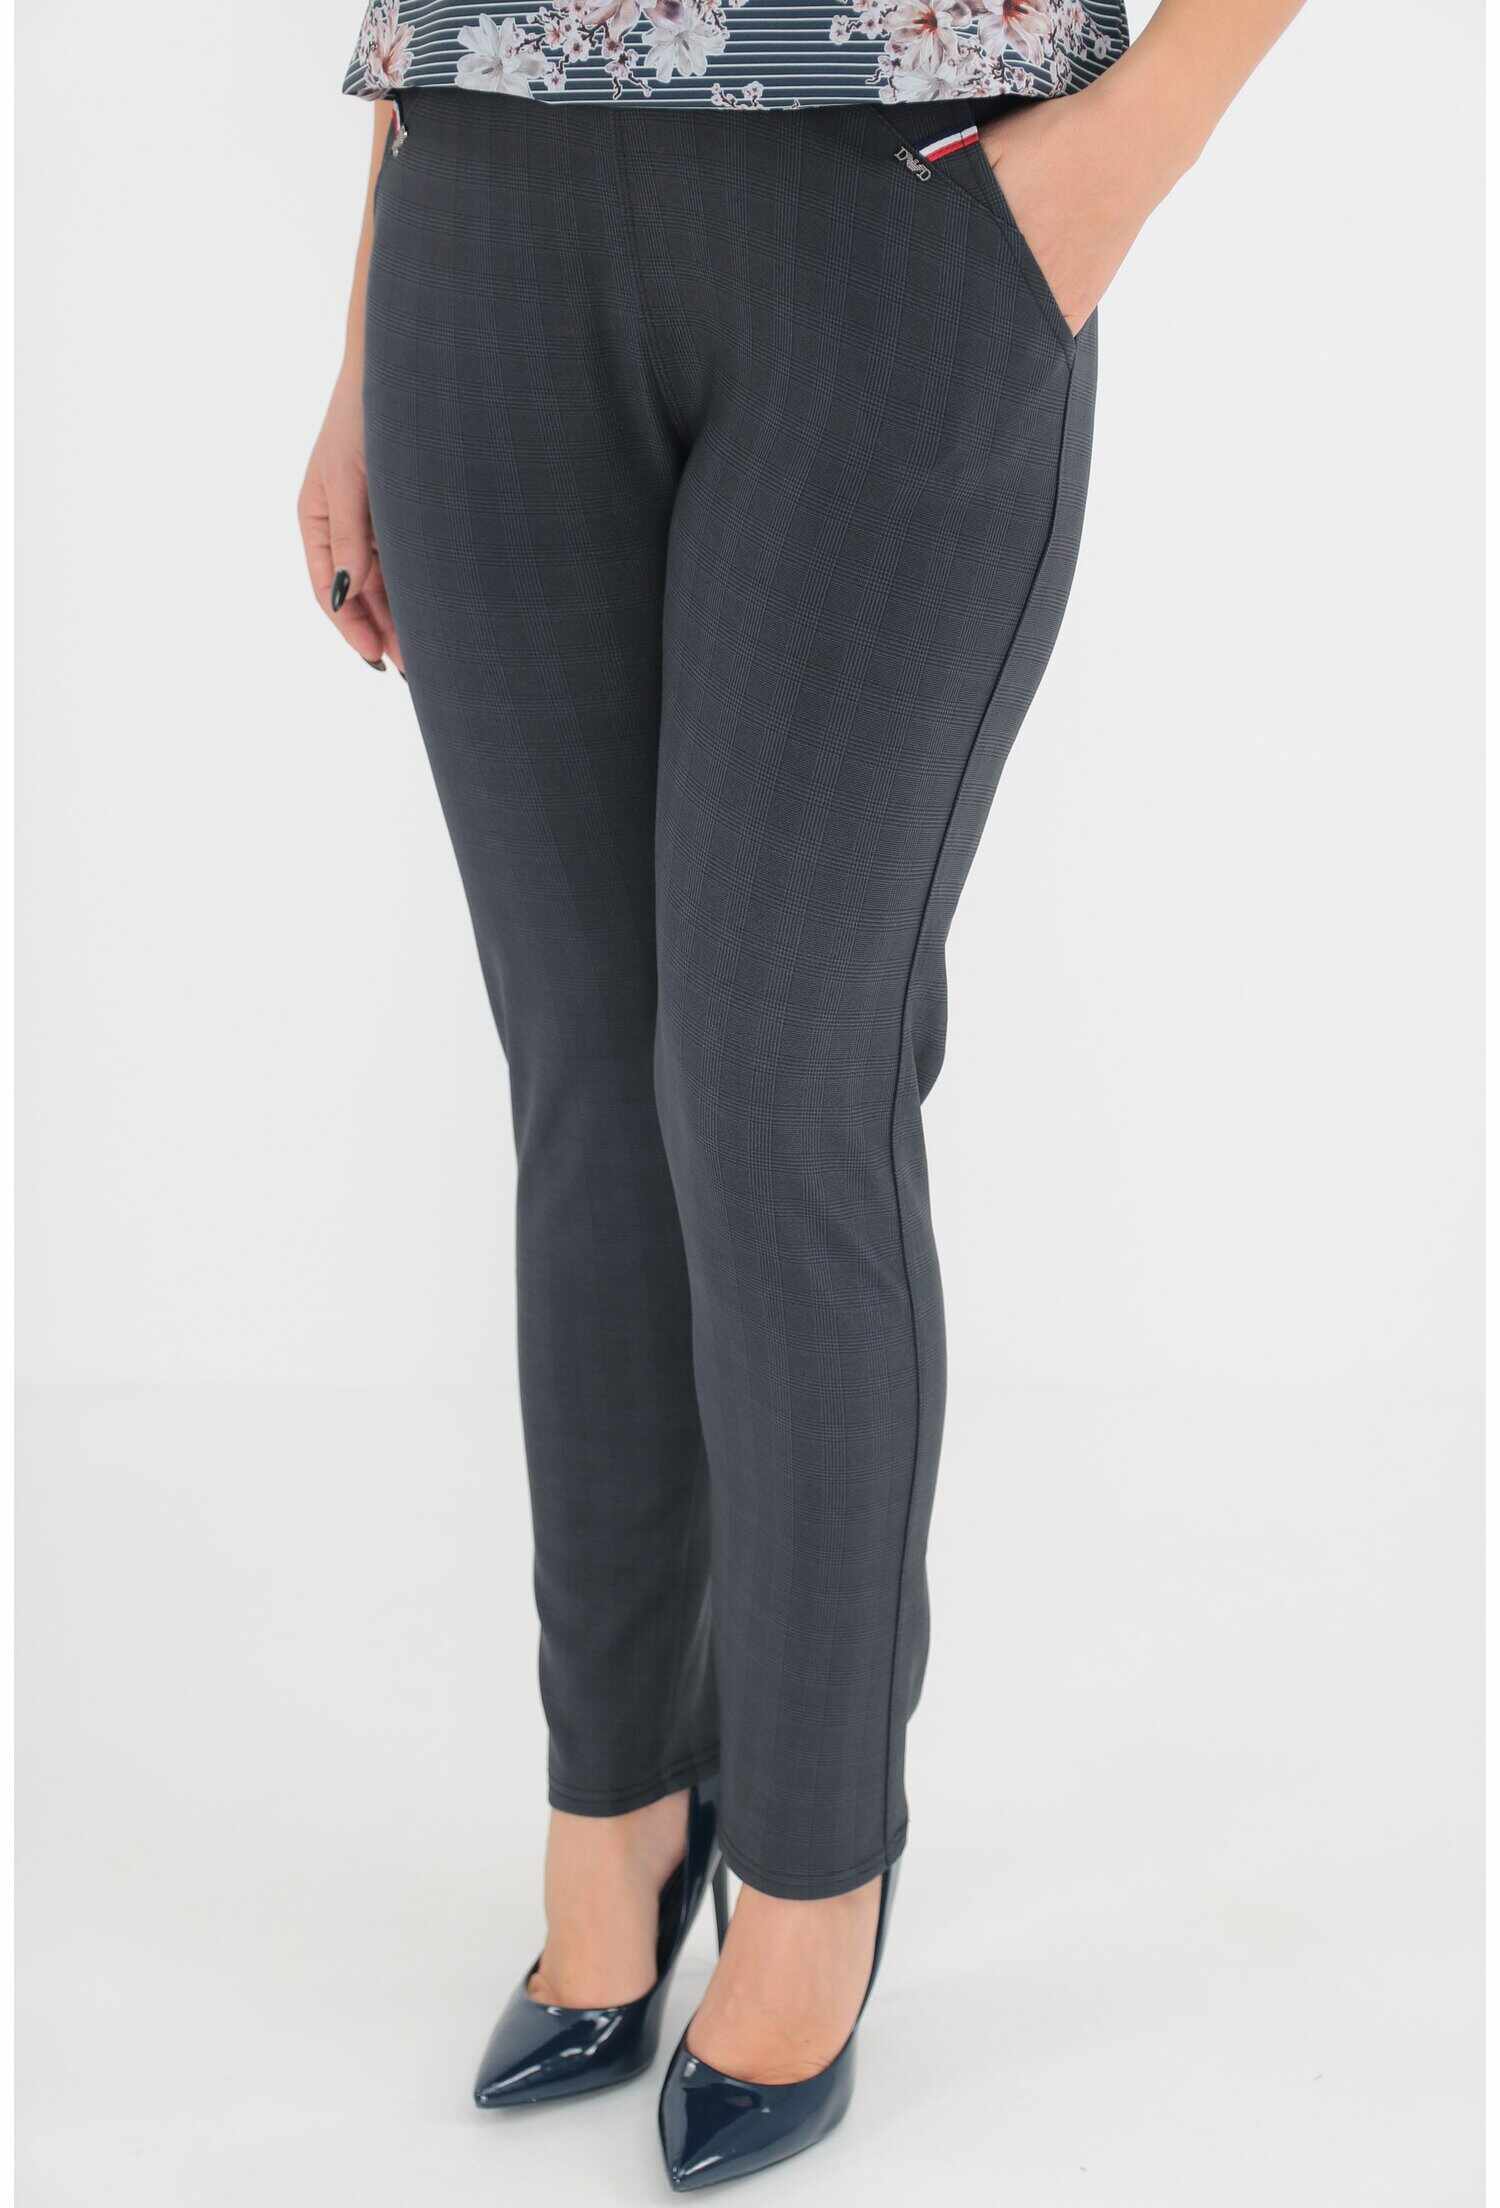 Pantaloni bleumarin cu model discret in carouri